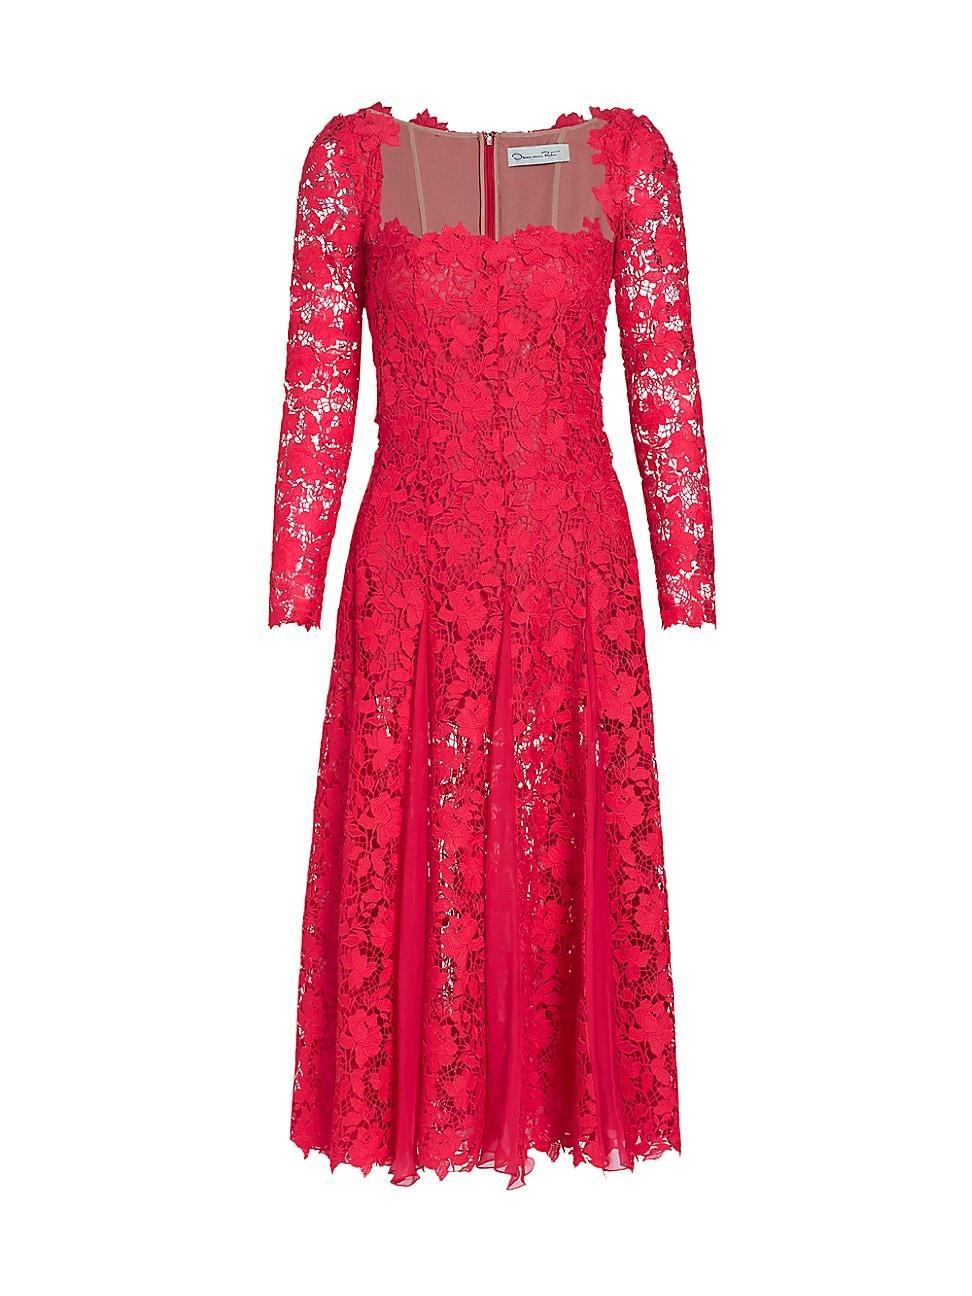 Oscar de la Renta Gardenia Long Sleeve Guipure Lace Fit & Flare Dress Product Image